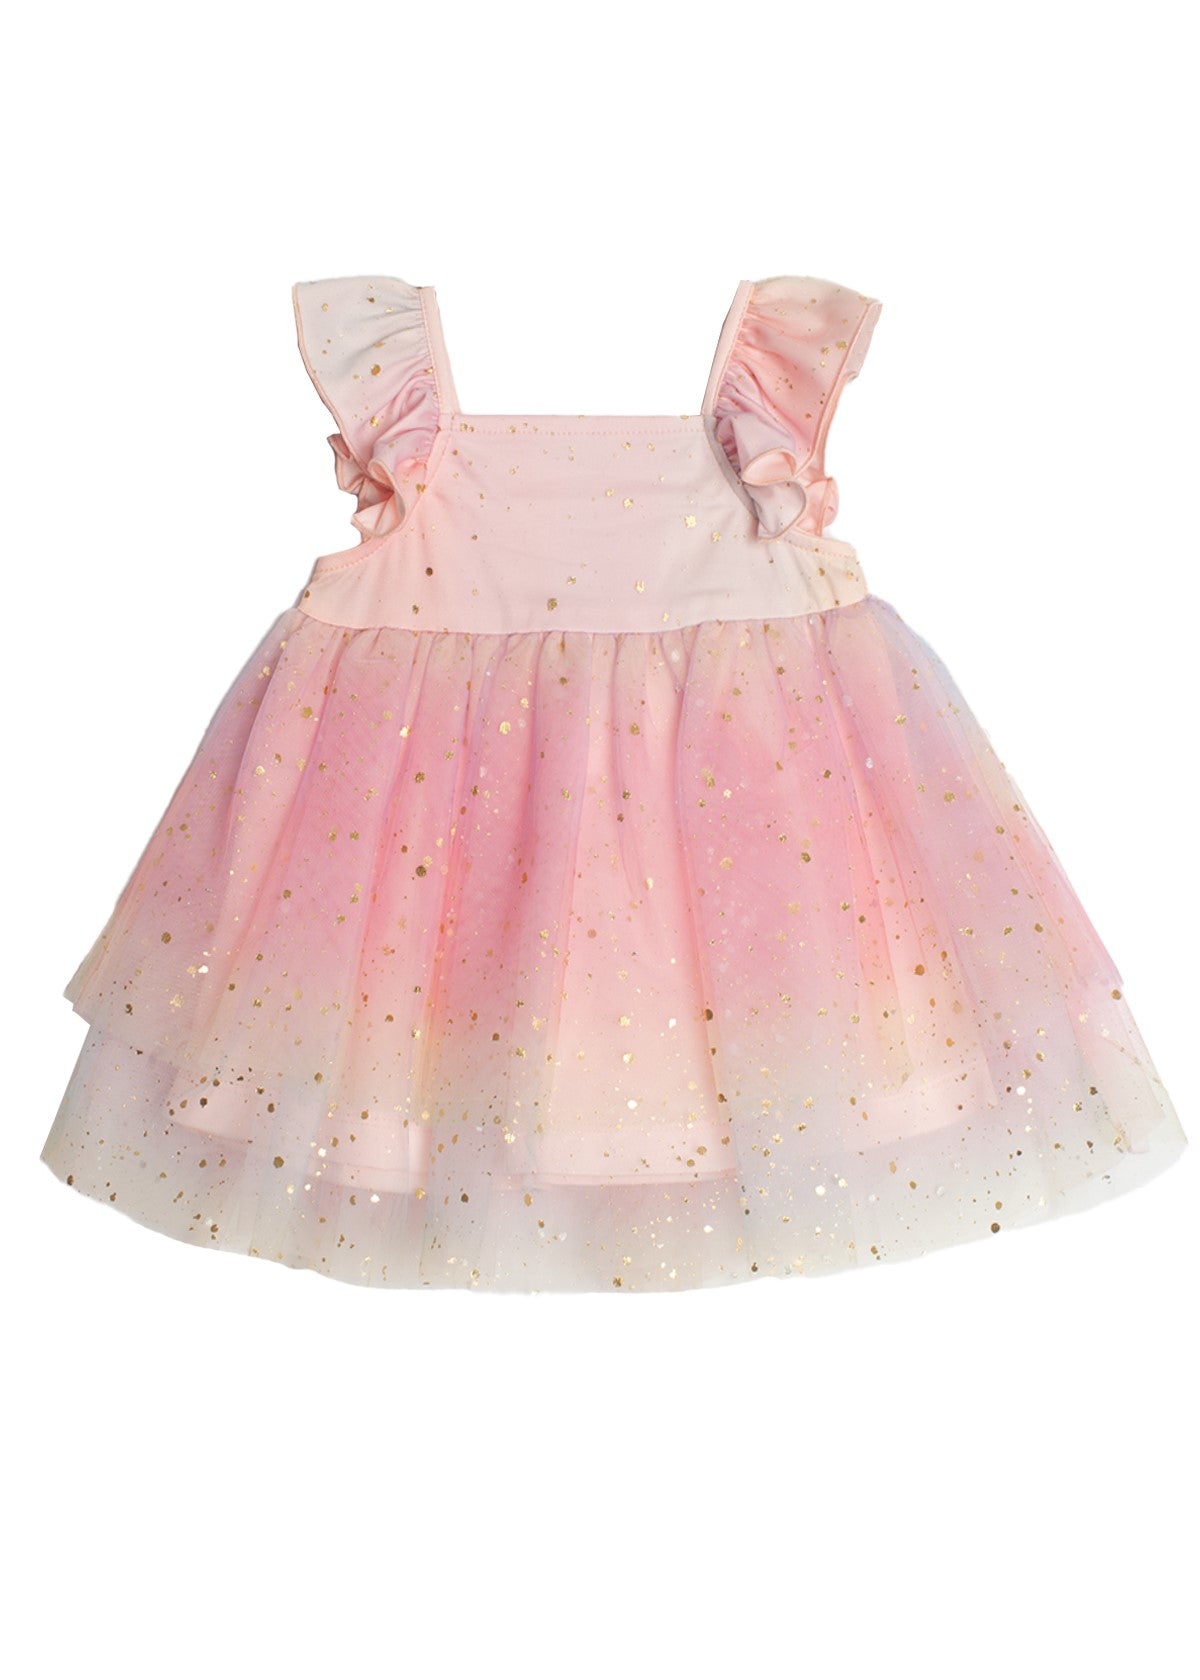 Isobella & Chloe Rainbow Delight Dress - Pink